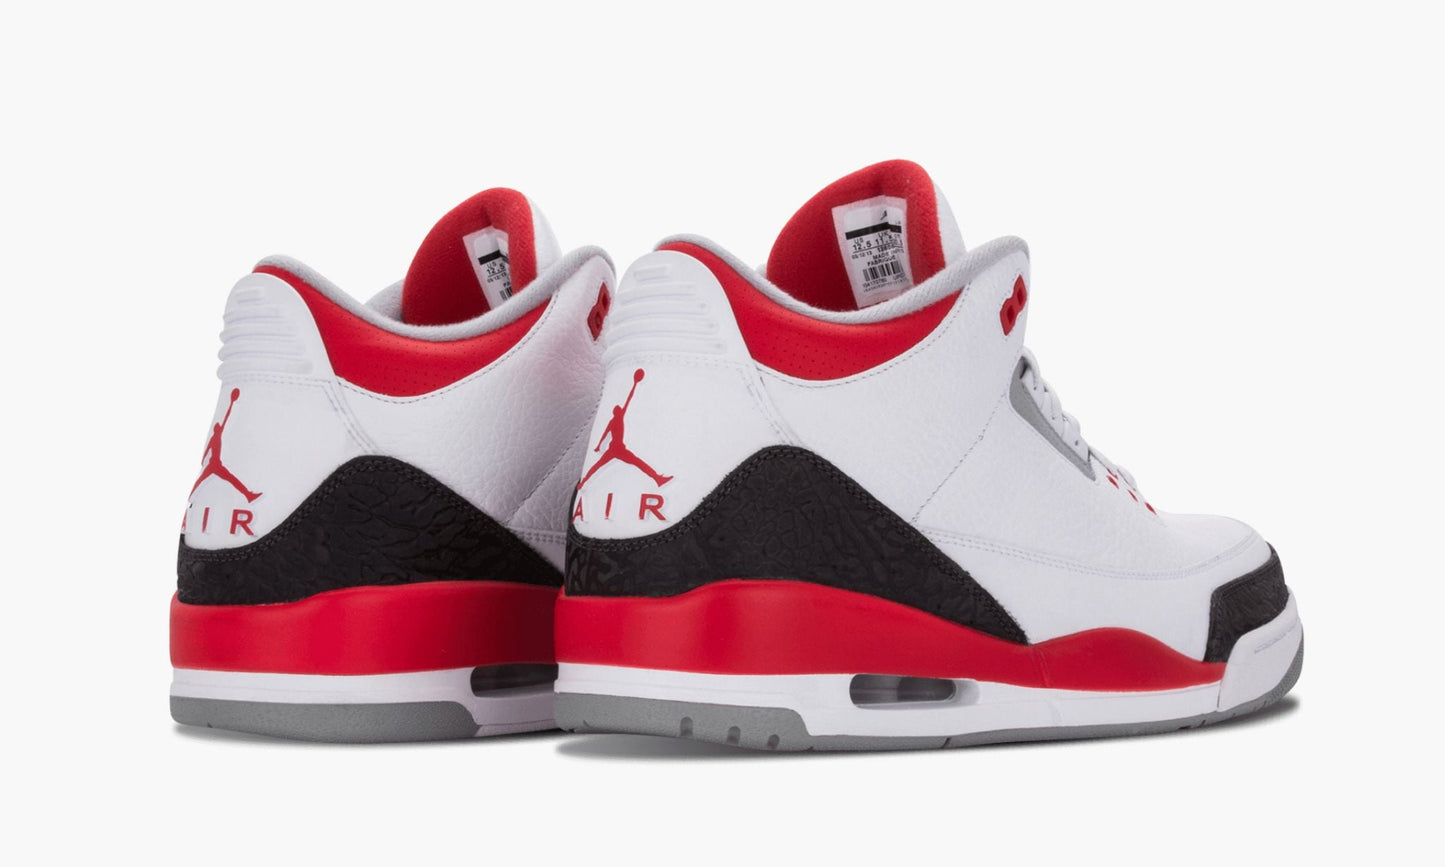 Air Jordan 3 Retro "Fire Red"